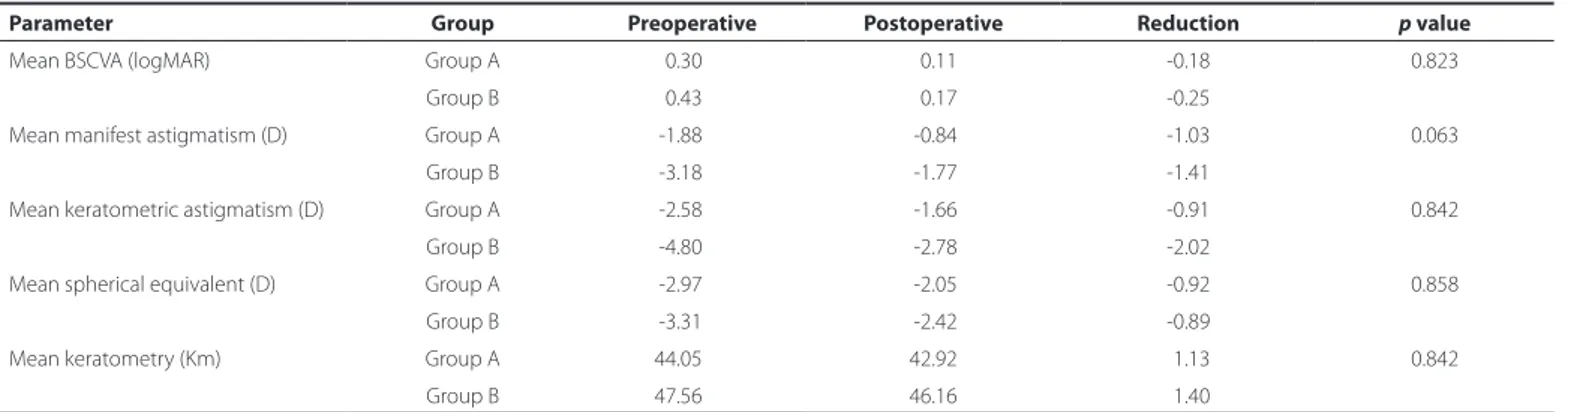 Figure 1. Preoperative x postoperative results.